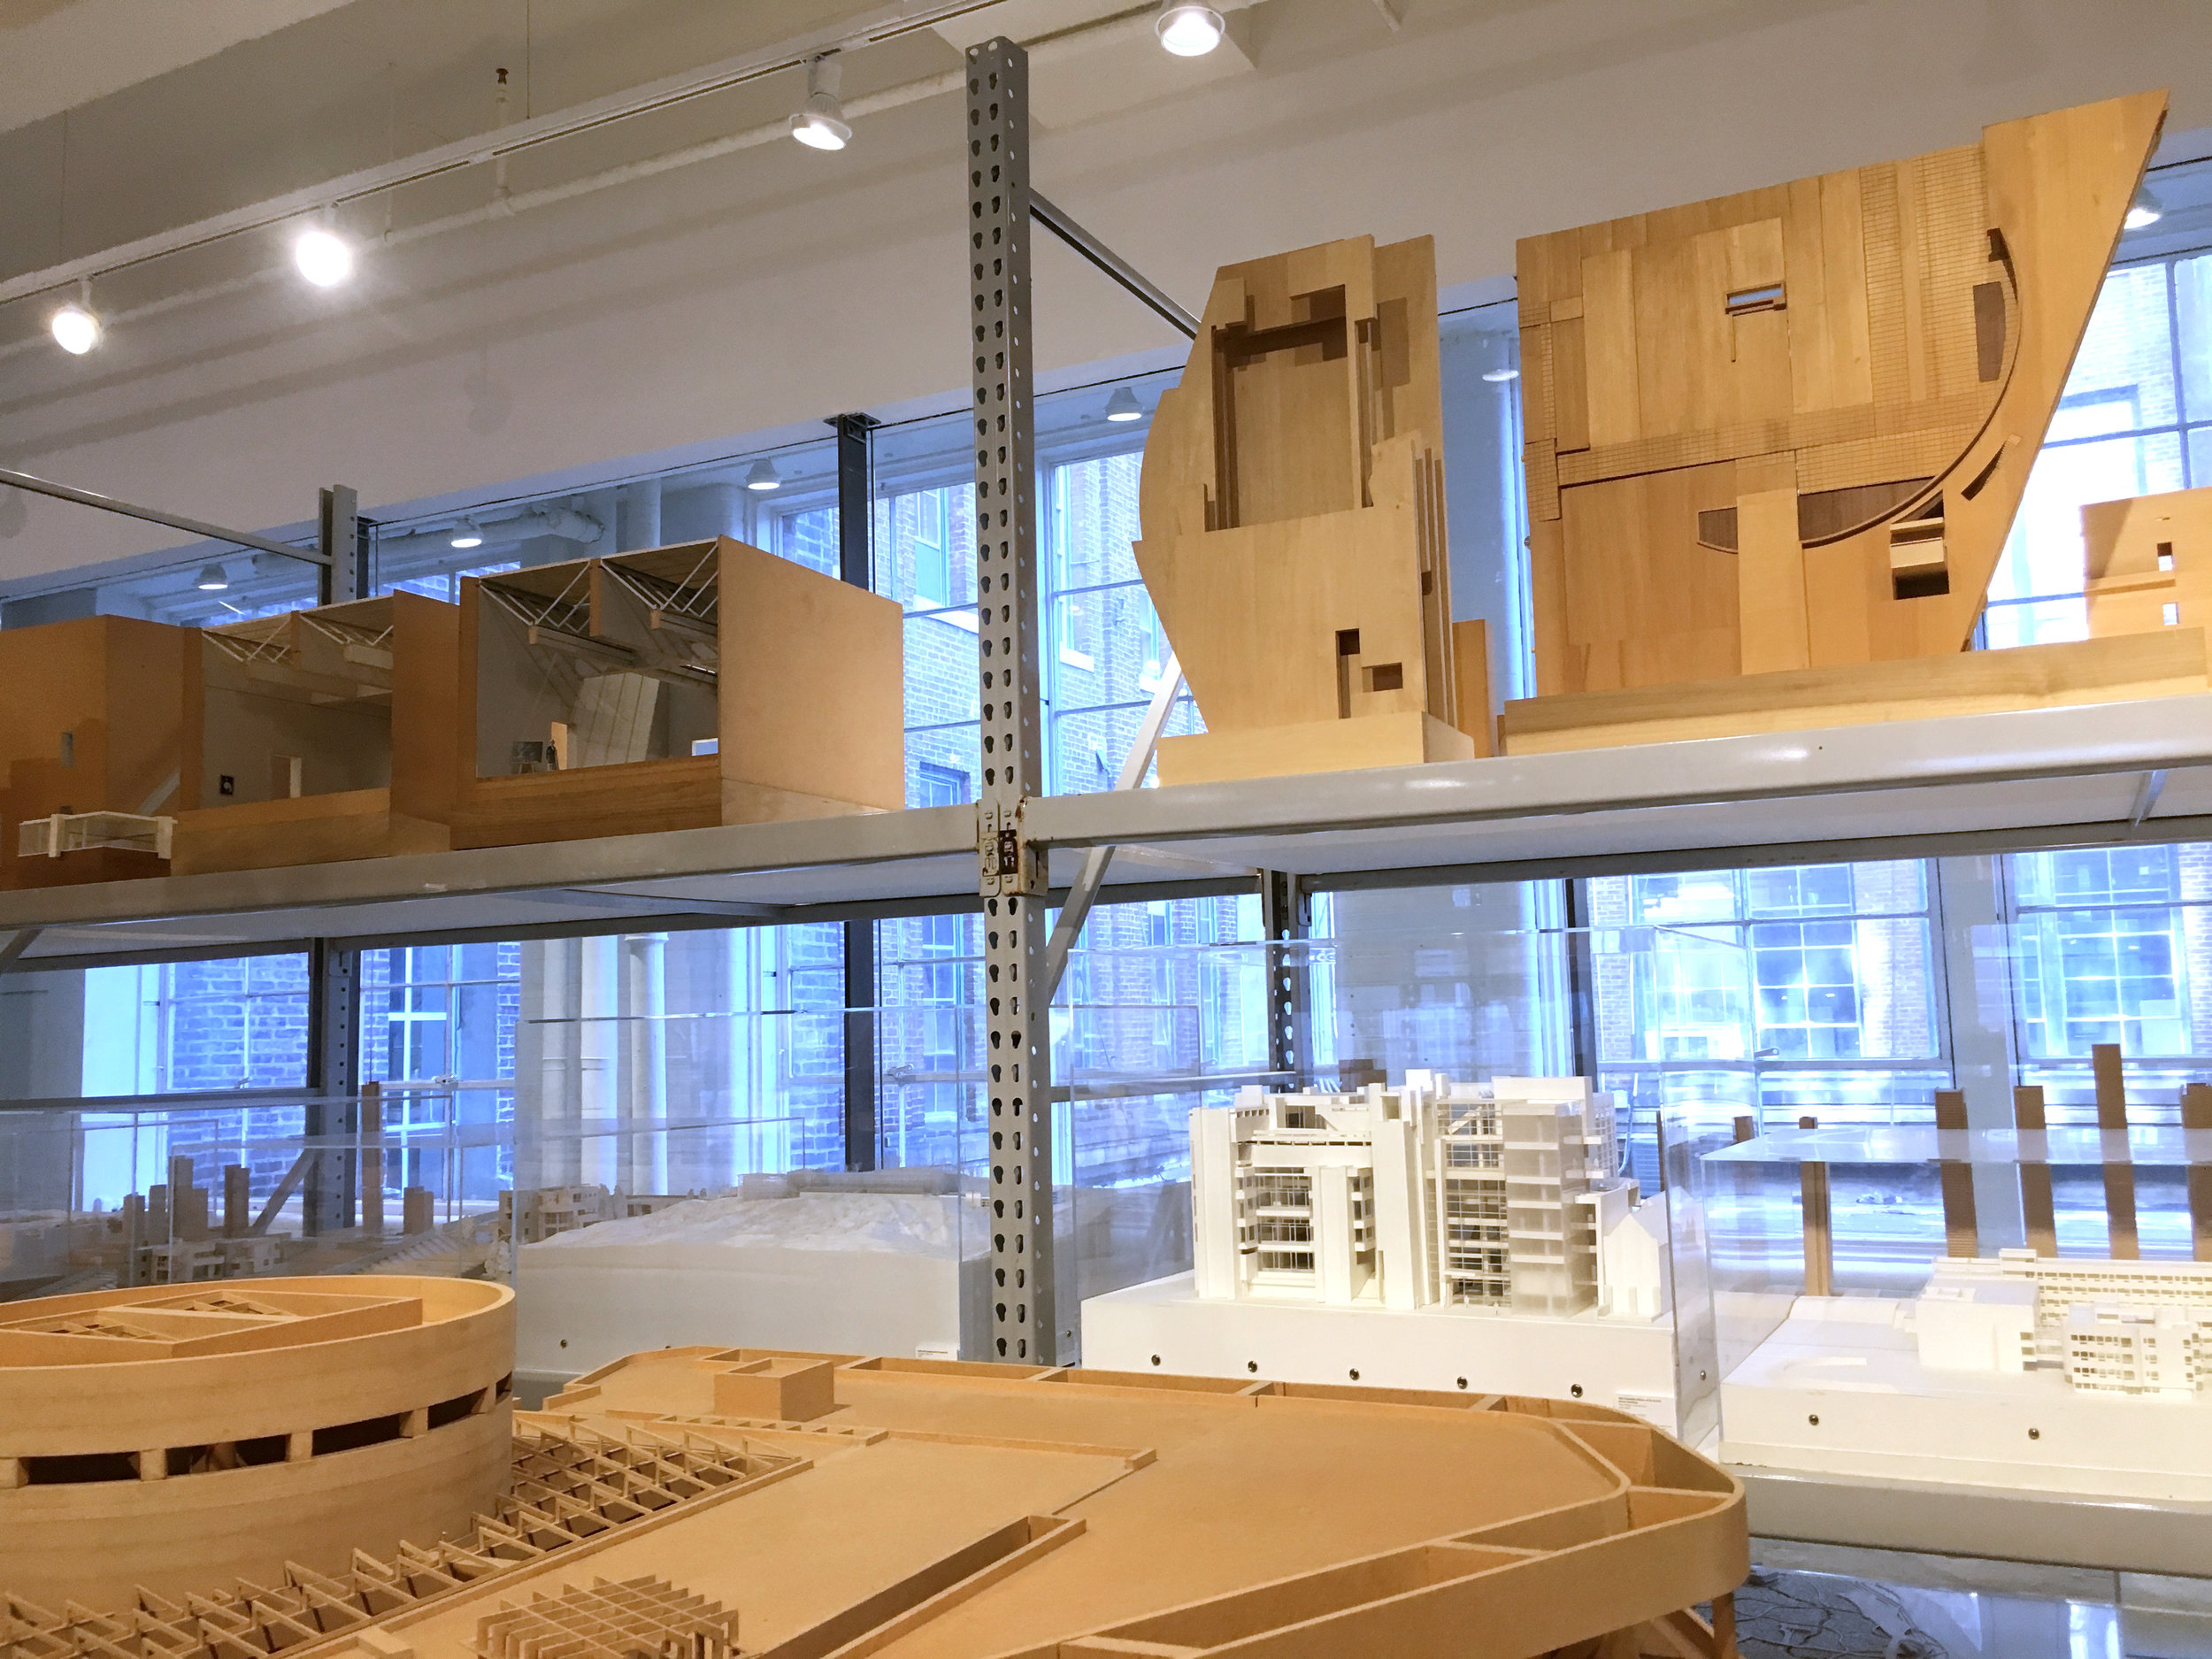  Richard Meier Archive, Mana Contemporary 